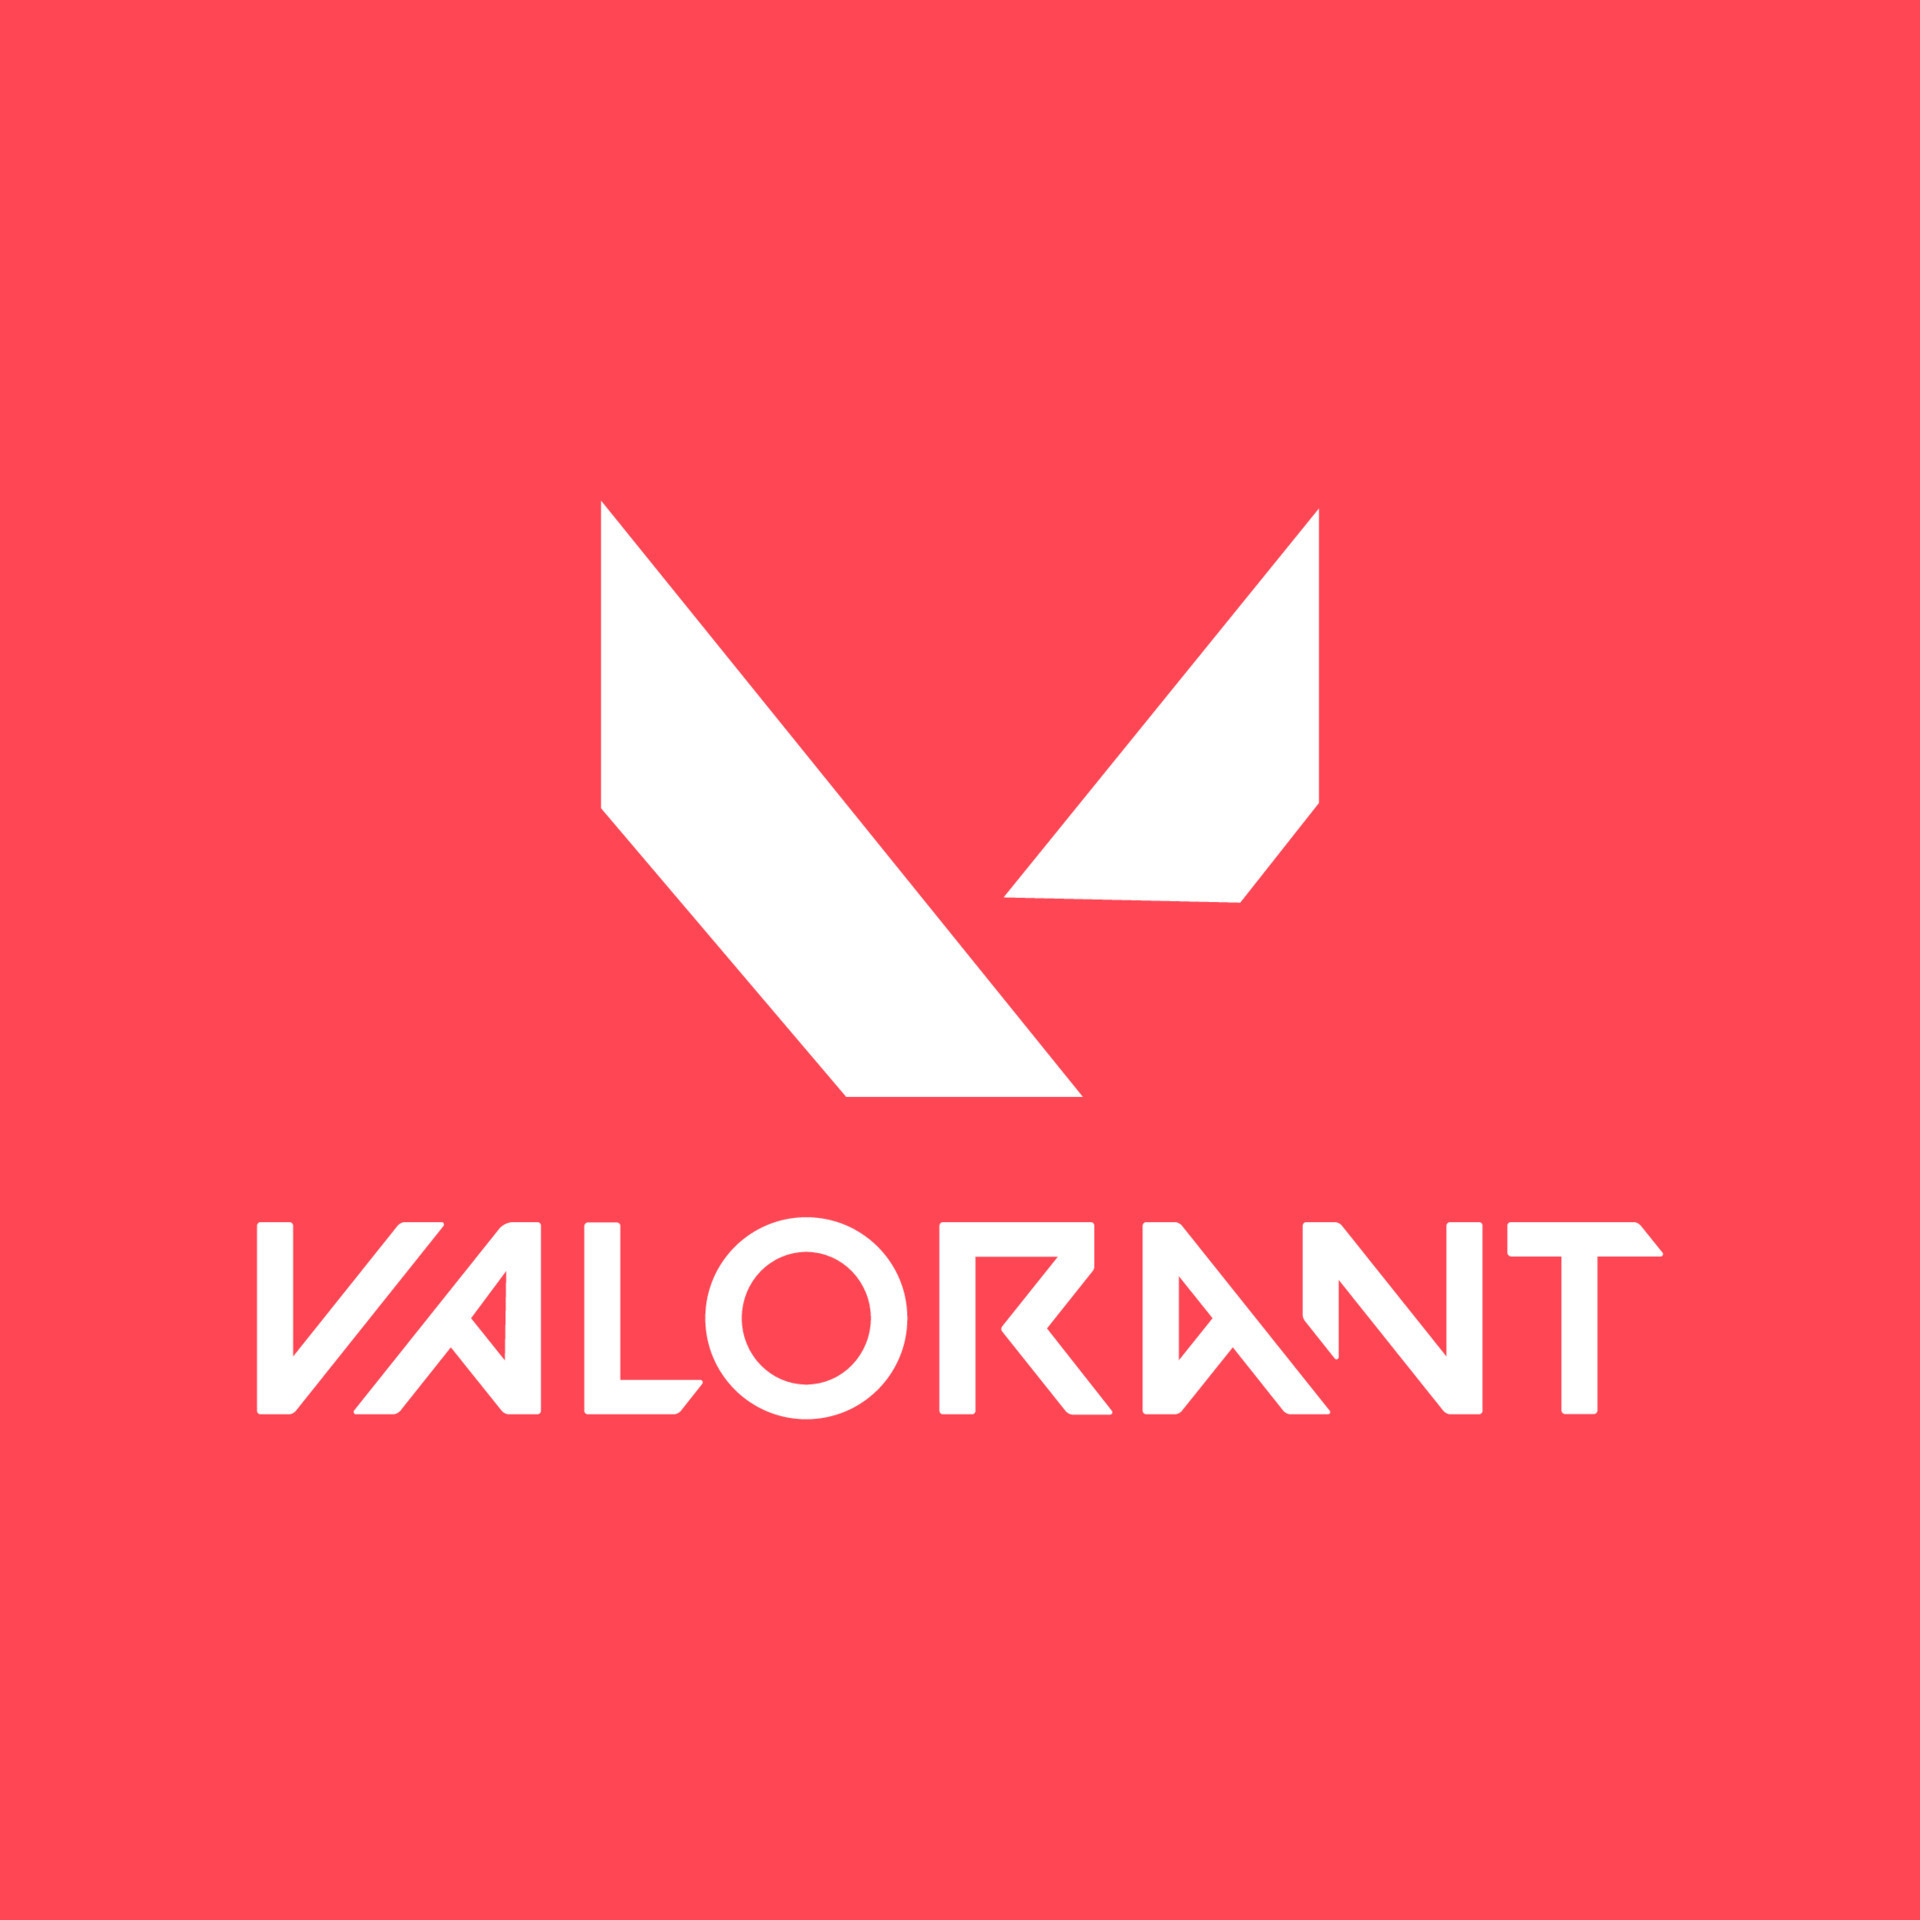 Valorant logo white 19040372 Vector Art at Vecteezy